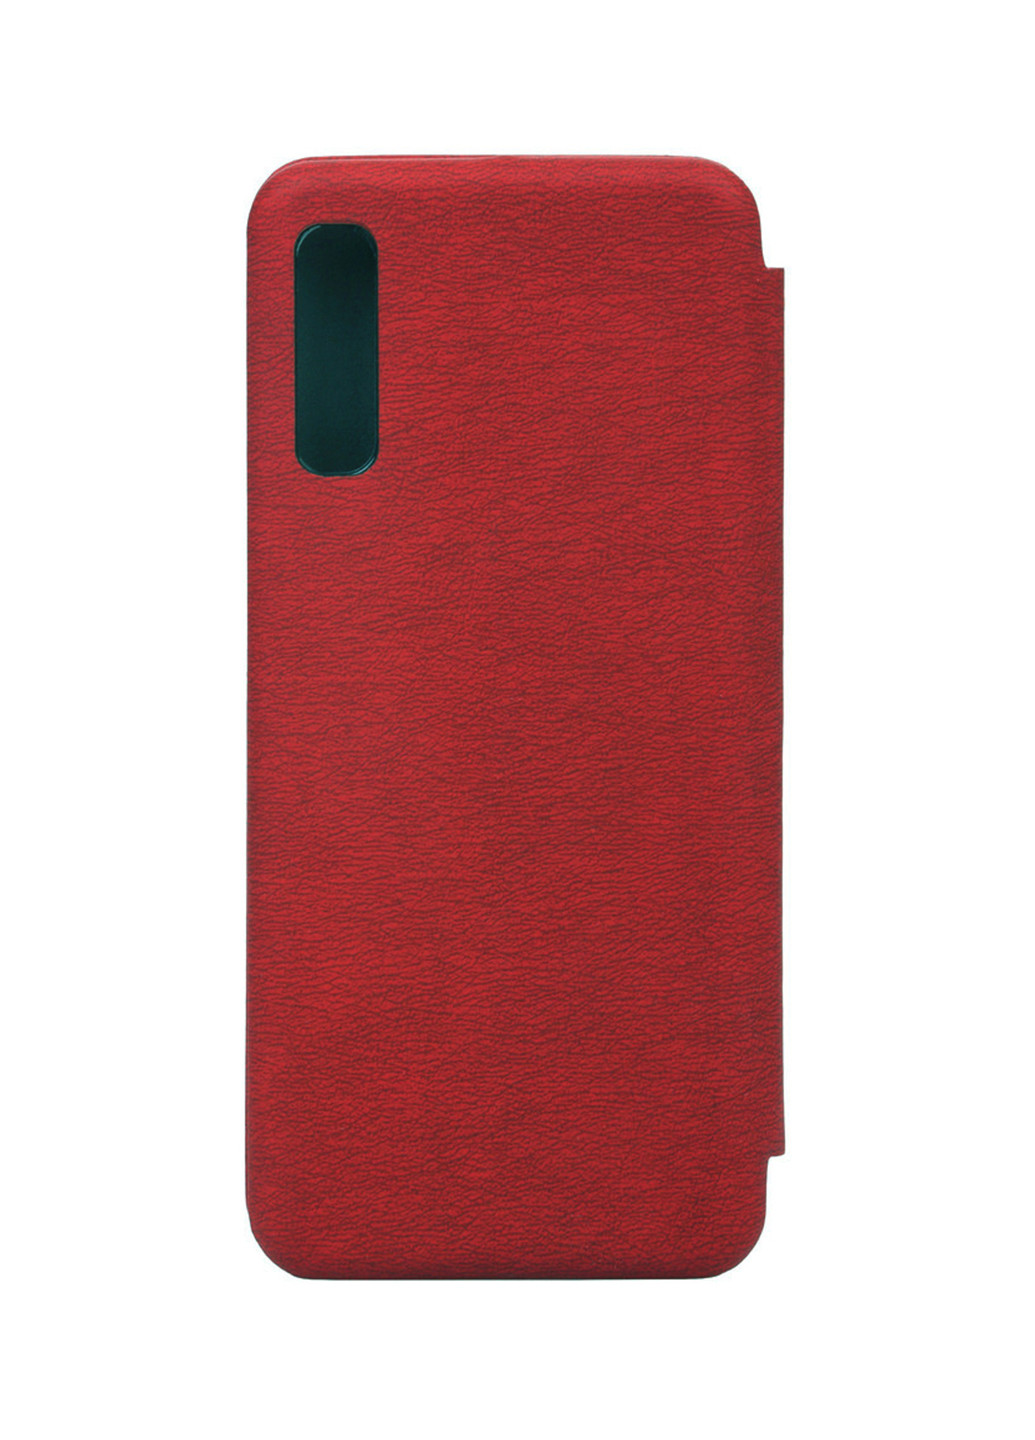 Чехол-книжка Exclusive для Samsung Galaxy A50 SM-A505 Burgundy Red (703704) BeCover книжка exclusive для samsung galaxy a50 sm-a505 burgundy red (703704) (145630646)